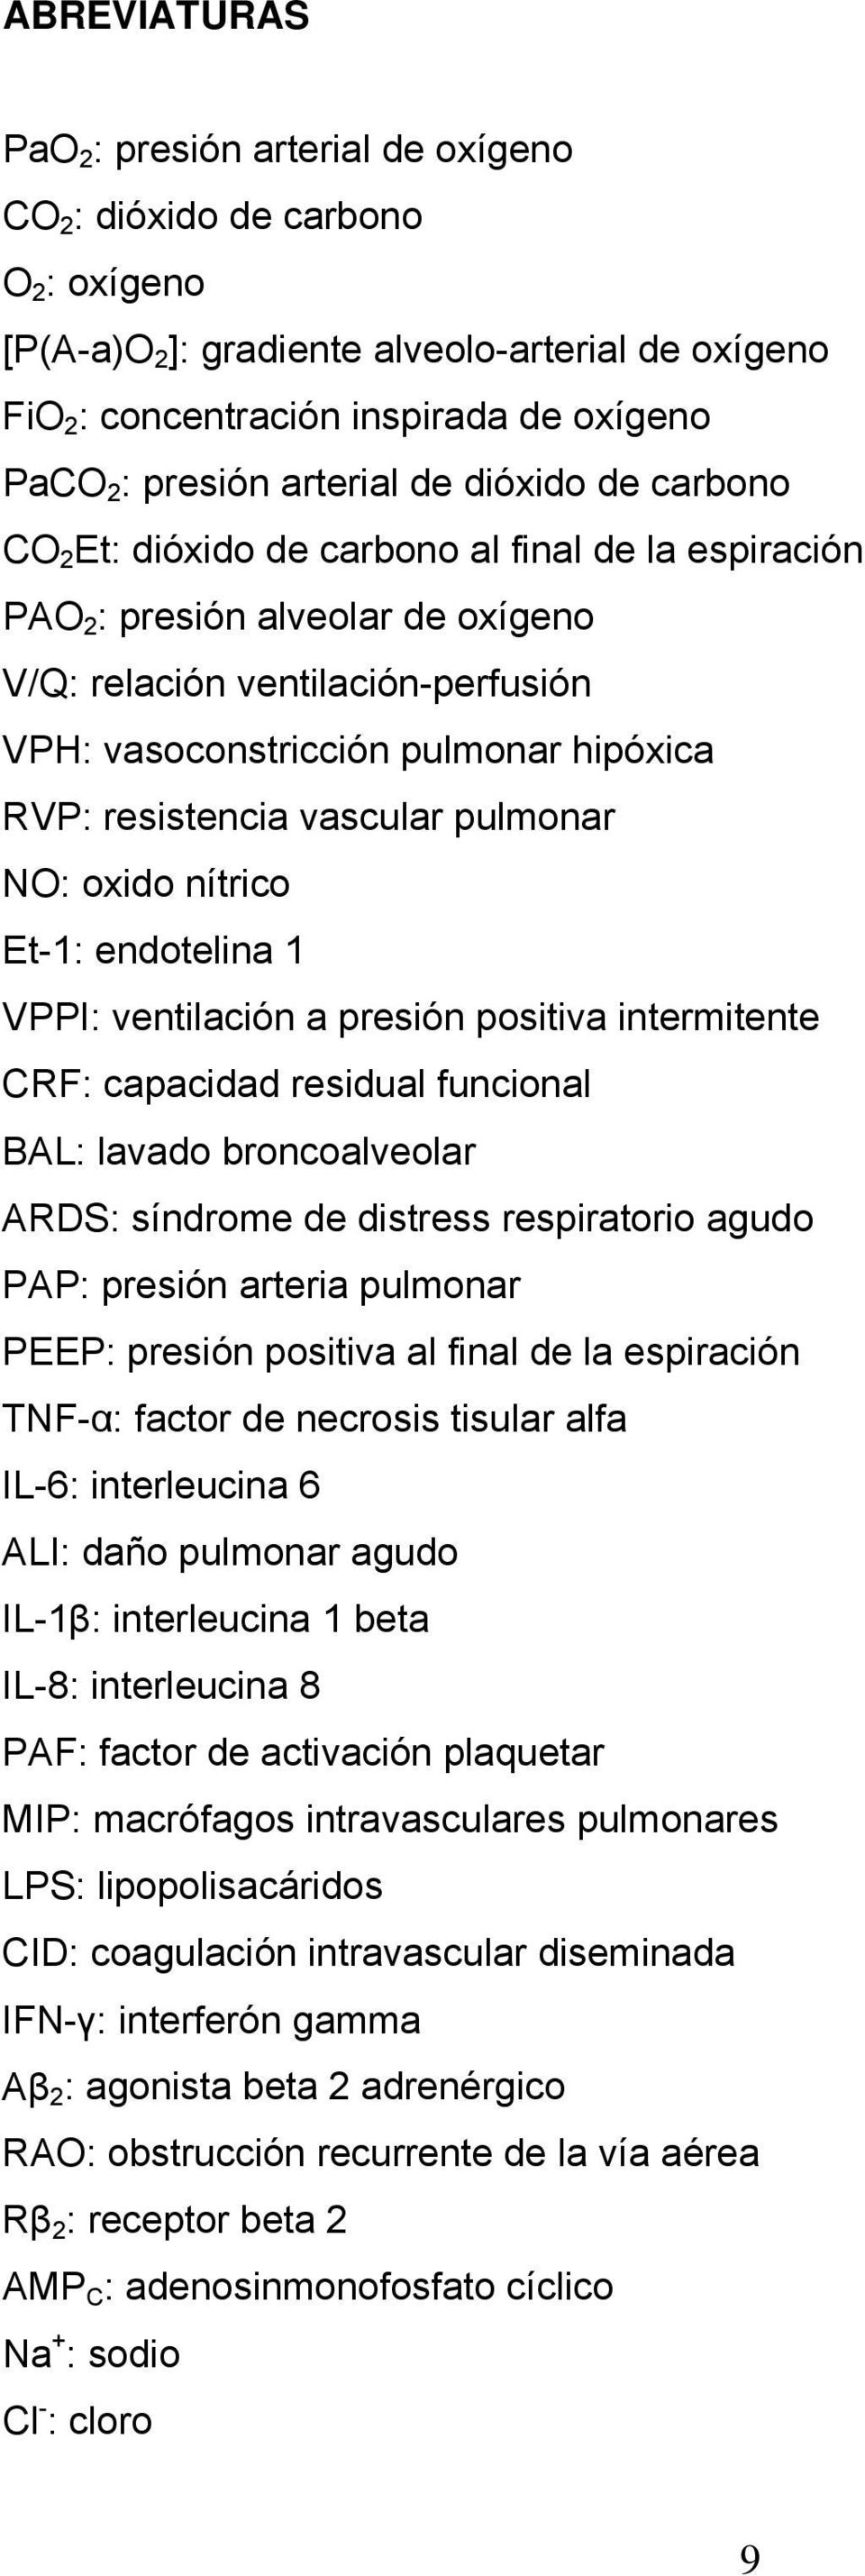 hipóxica RVP: resistencia vascular pulmonar NO: oxido nítrico Et-1: endotelina 1 VPPI: ventilación a presión positiva intermitente CRF: capacidad residual funcional BAL: lavado broncoalveolar ARDS: